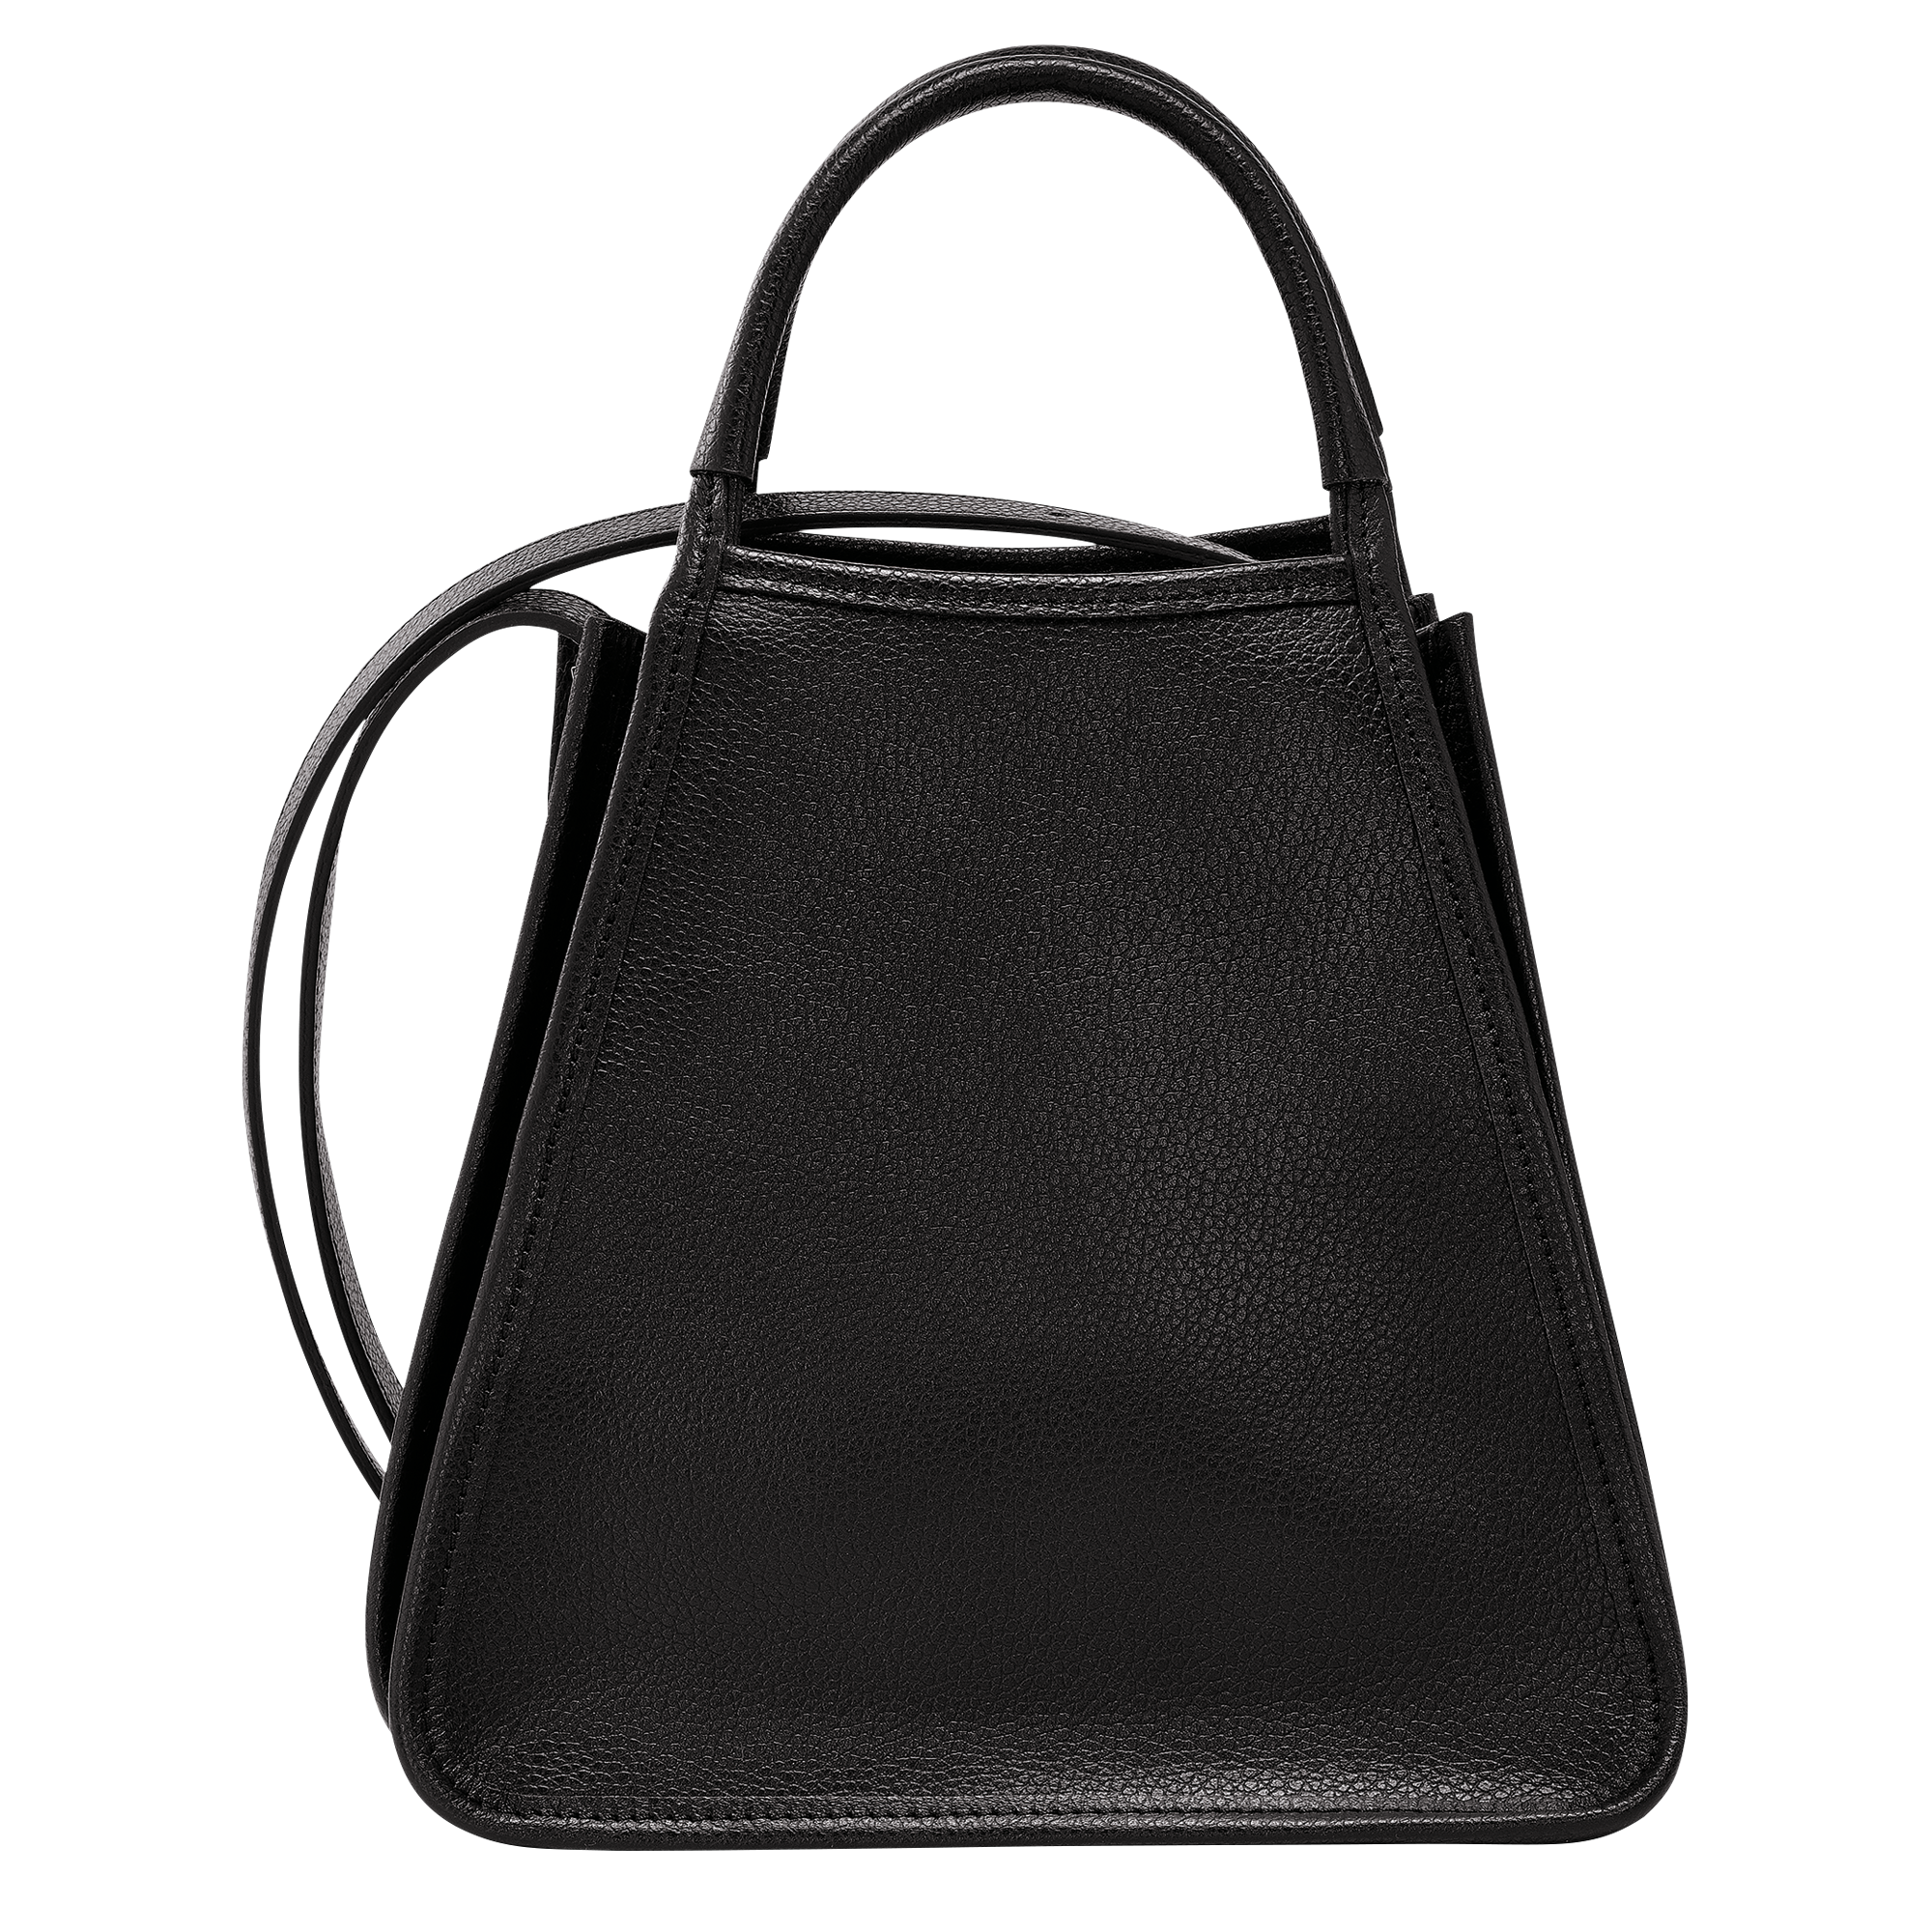 Le Foulonné Handbag S, Black